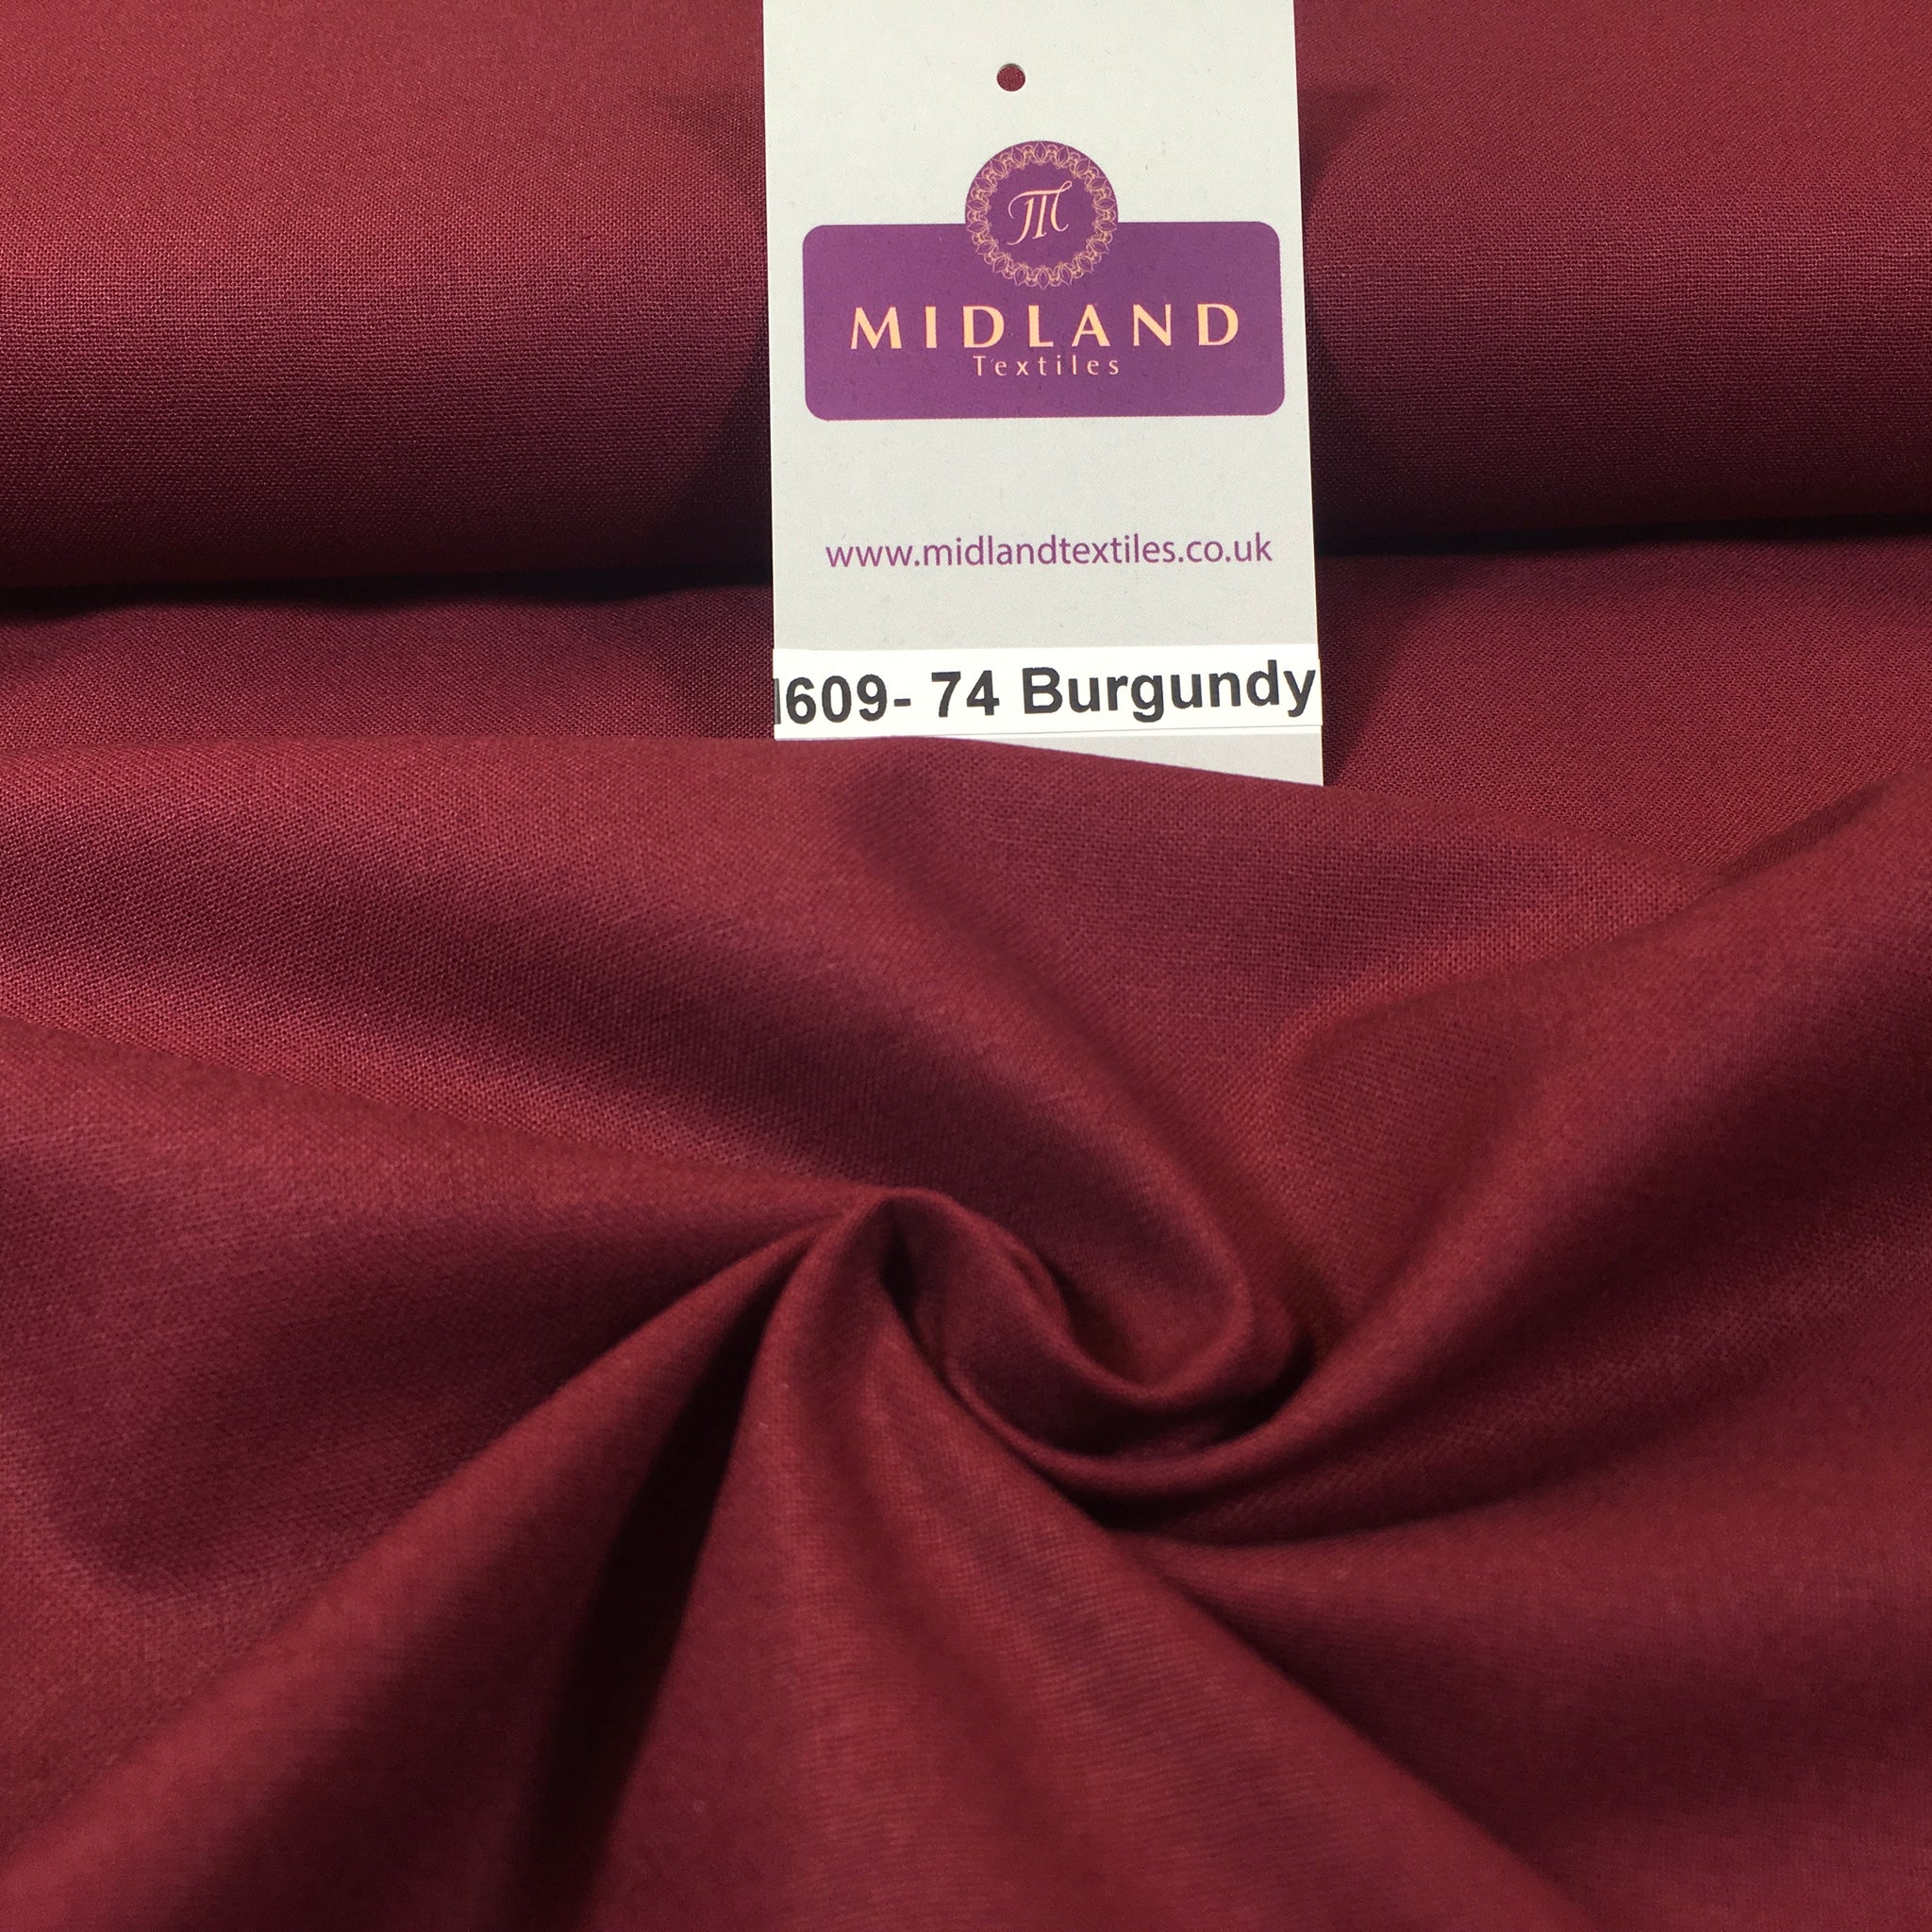 Plain Coloured True Craft 100% Cotton Dressmaking Patchwork Fabric 44" M609 lot2